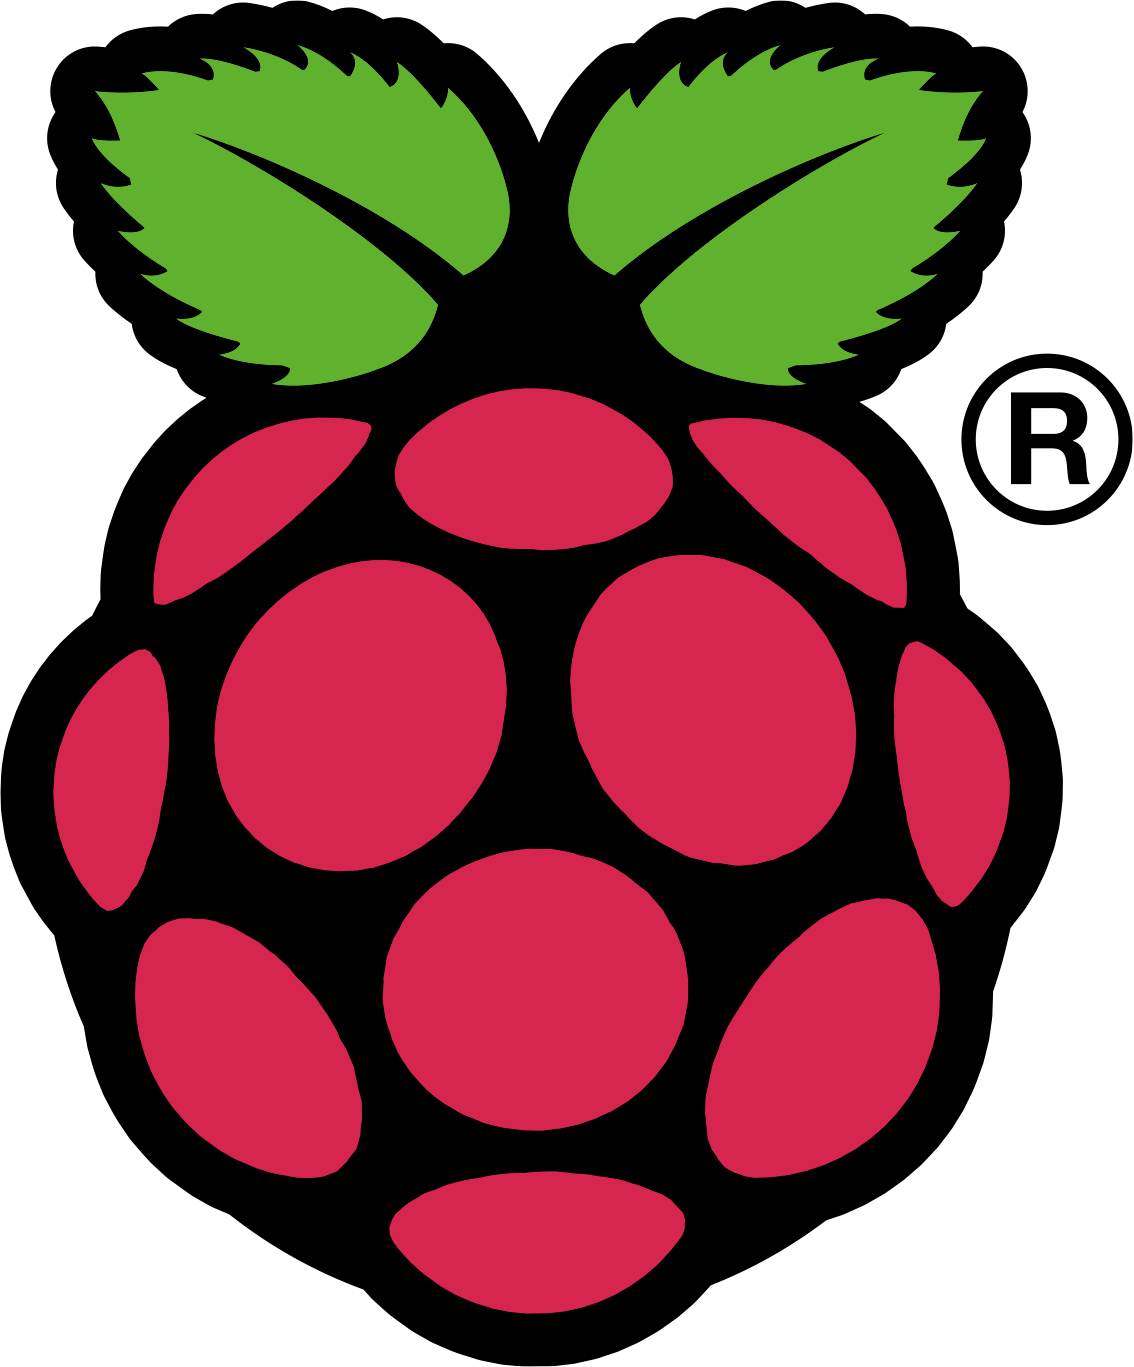 Raspbery Pi Logo